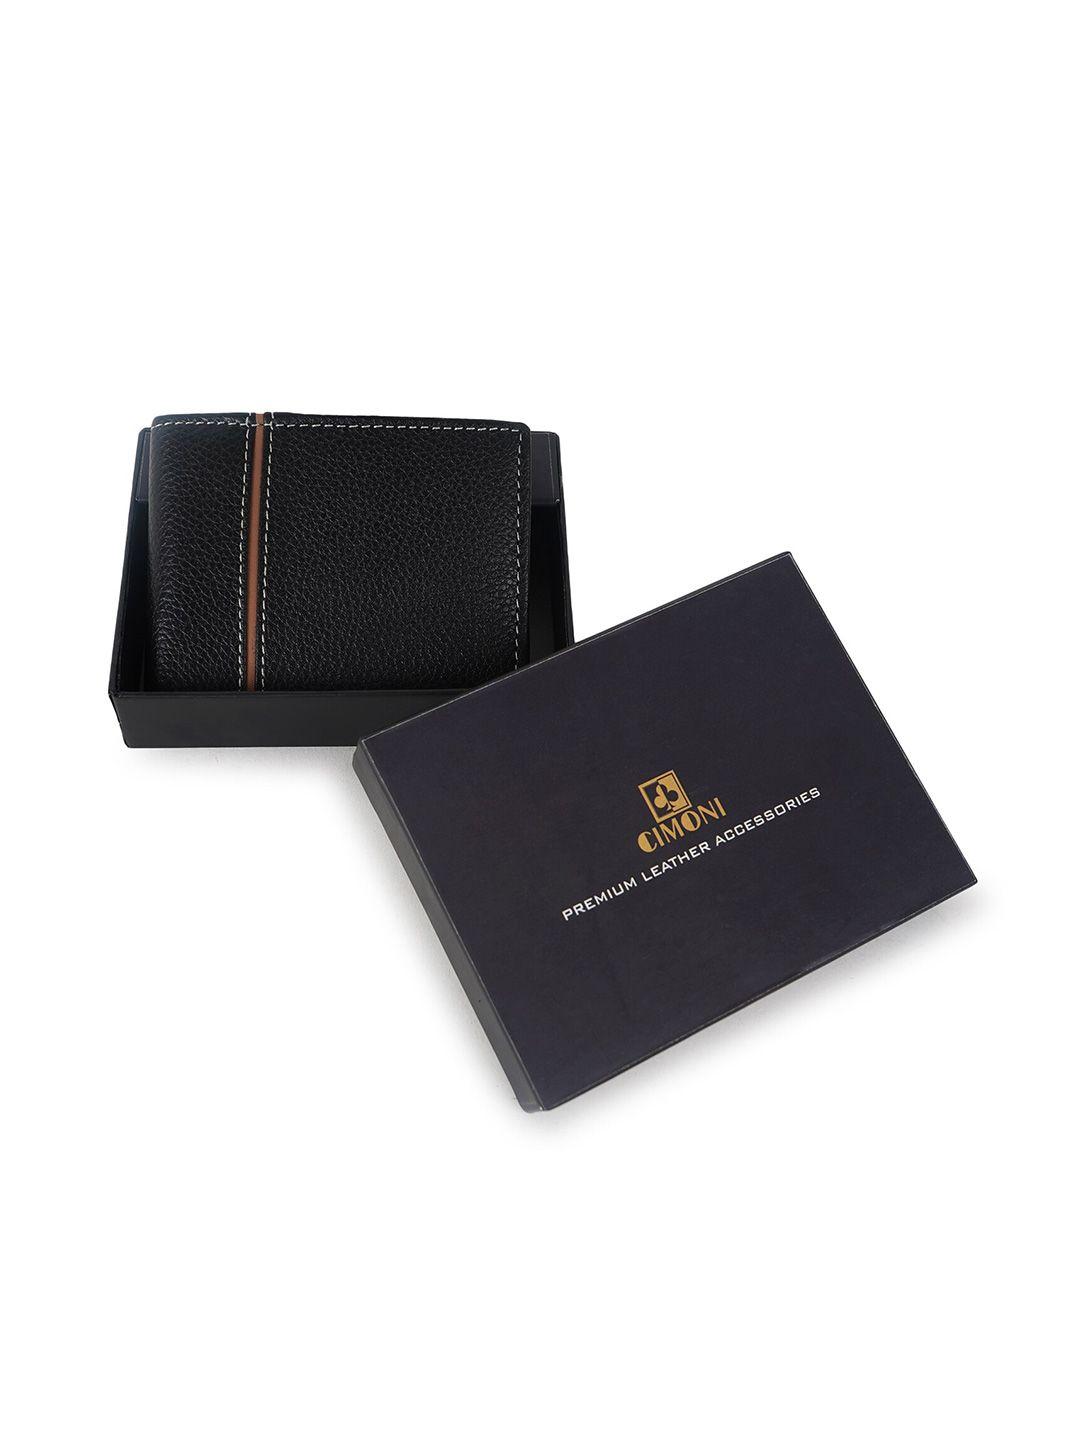 cimoni unisex black textured leather two fold wallet